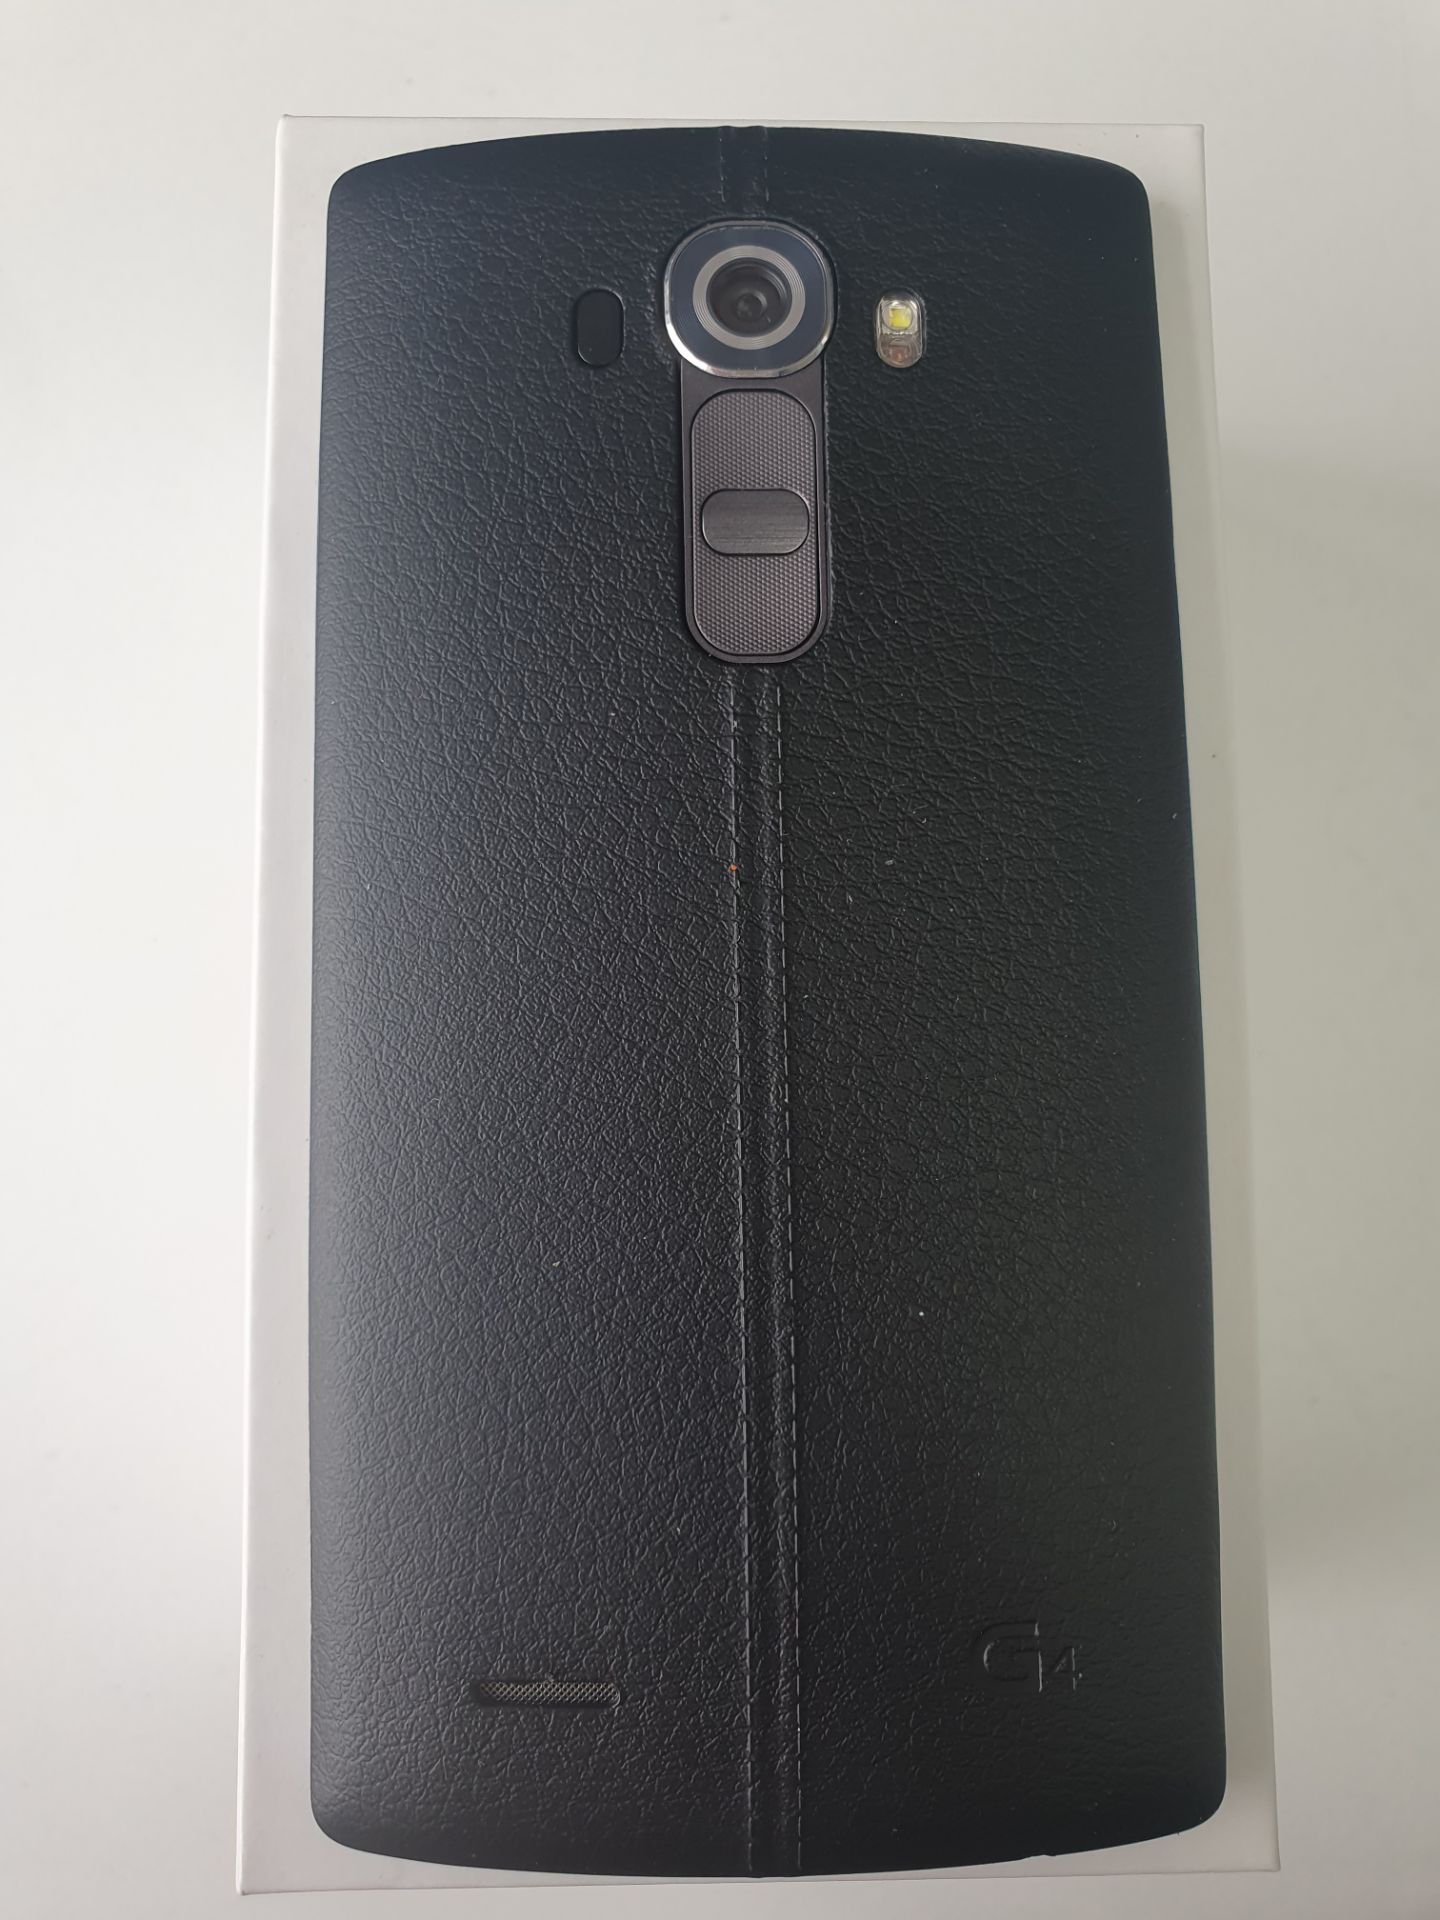 Ex-Display LG G4 Smartphone - Image 2 of 3